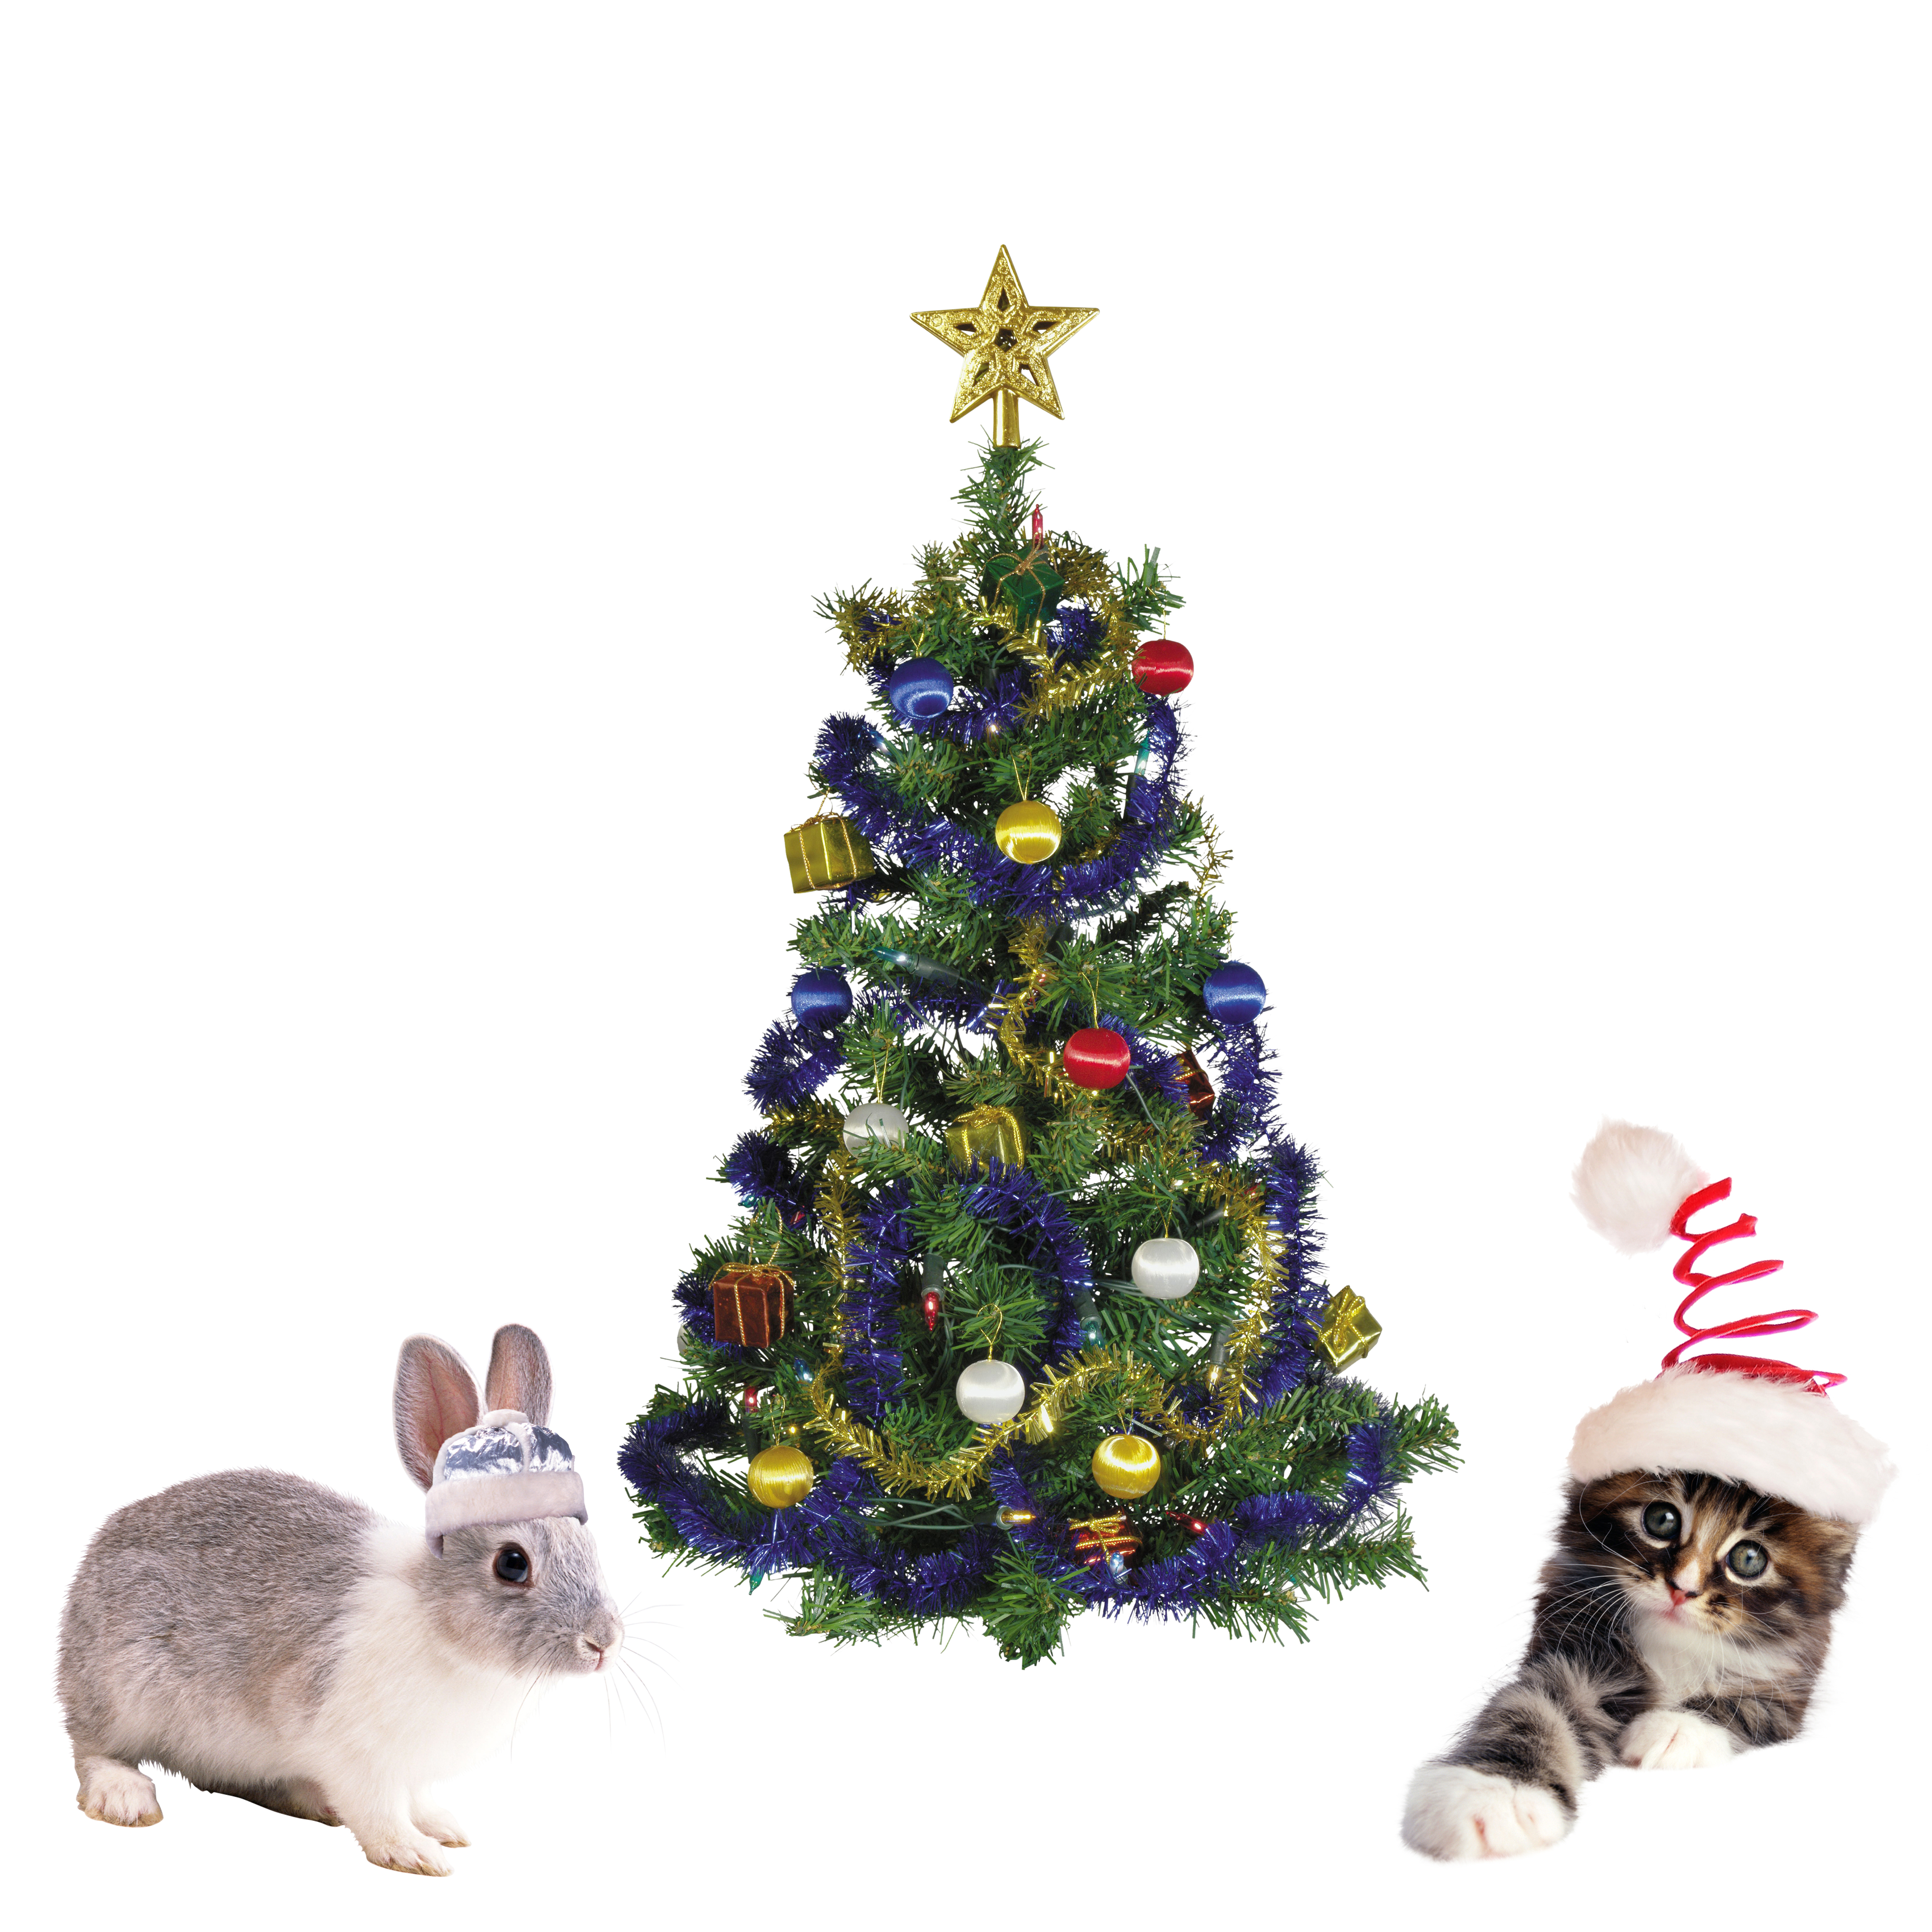 Christmas Pets, Bunny, Christmas, Kitten, Pets, HQ Photo